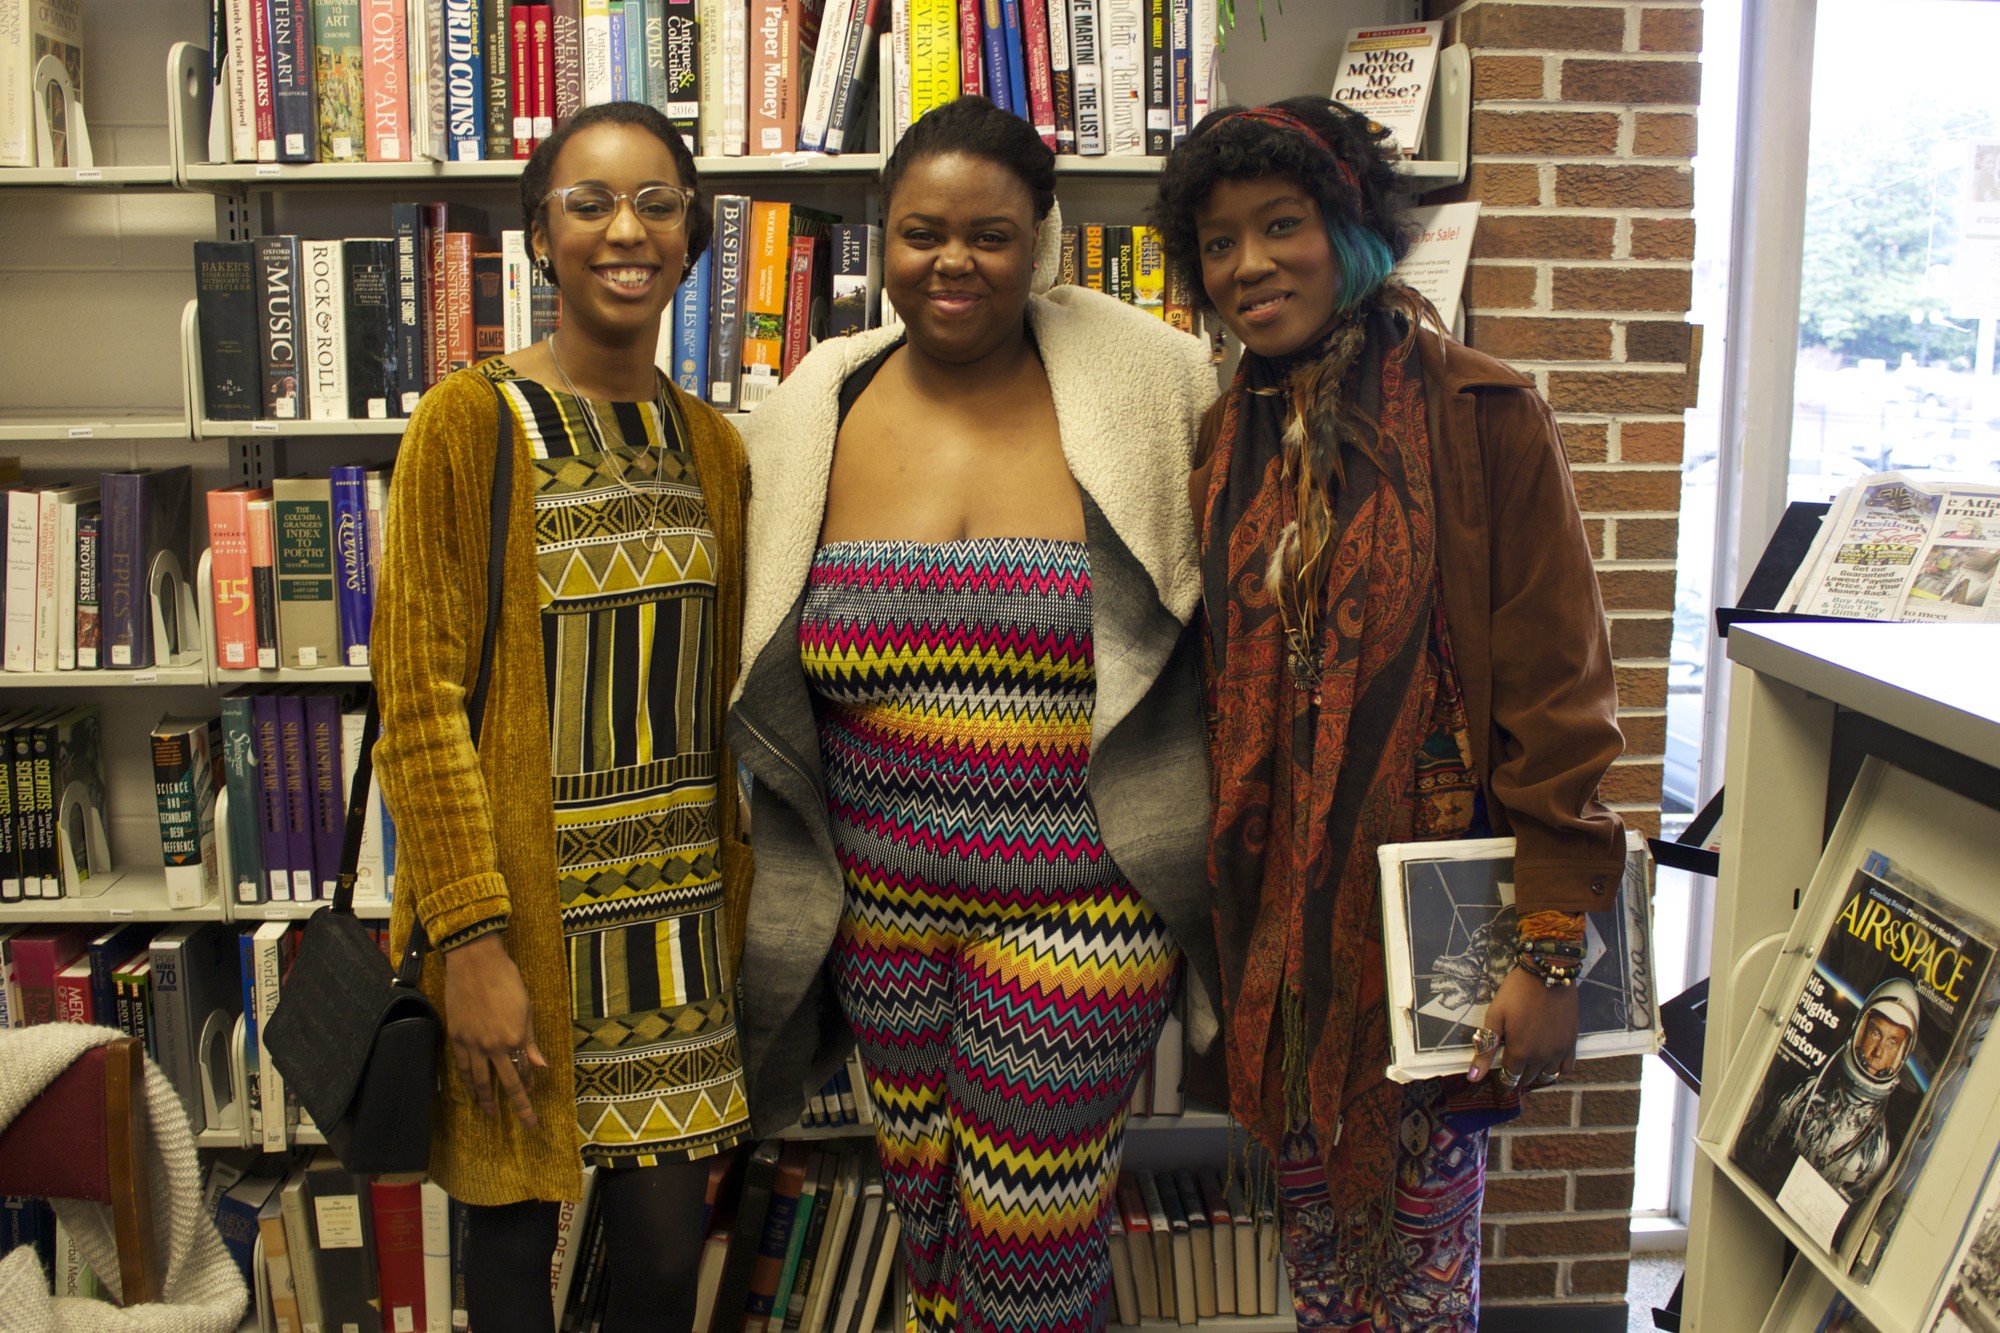 Black female students, alumni express ‘personal battles’ through art